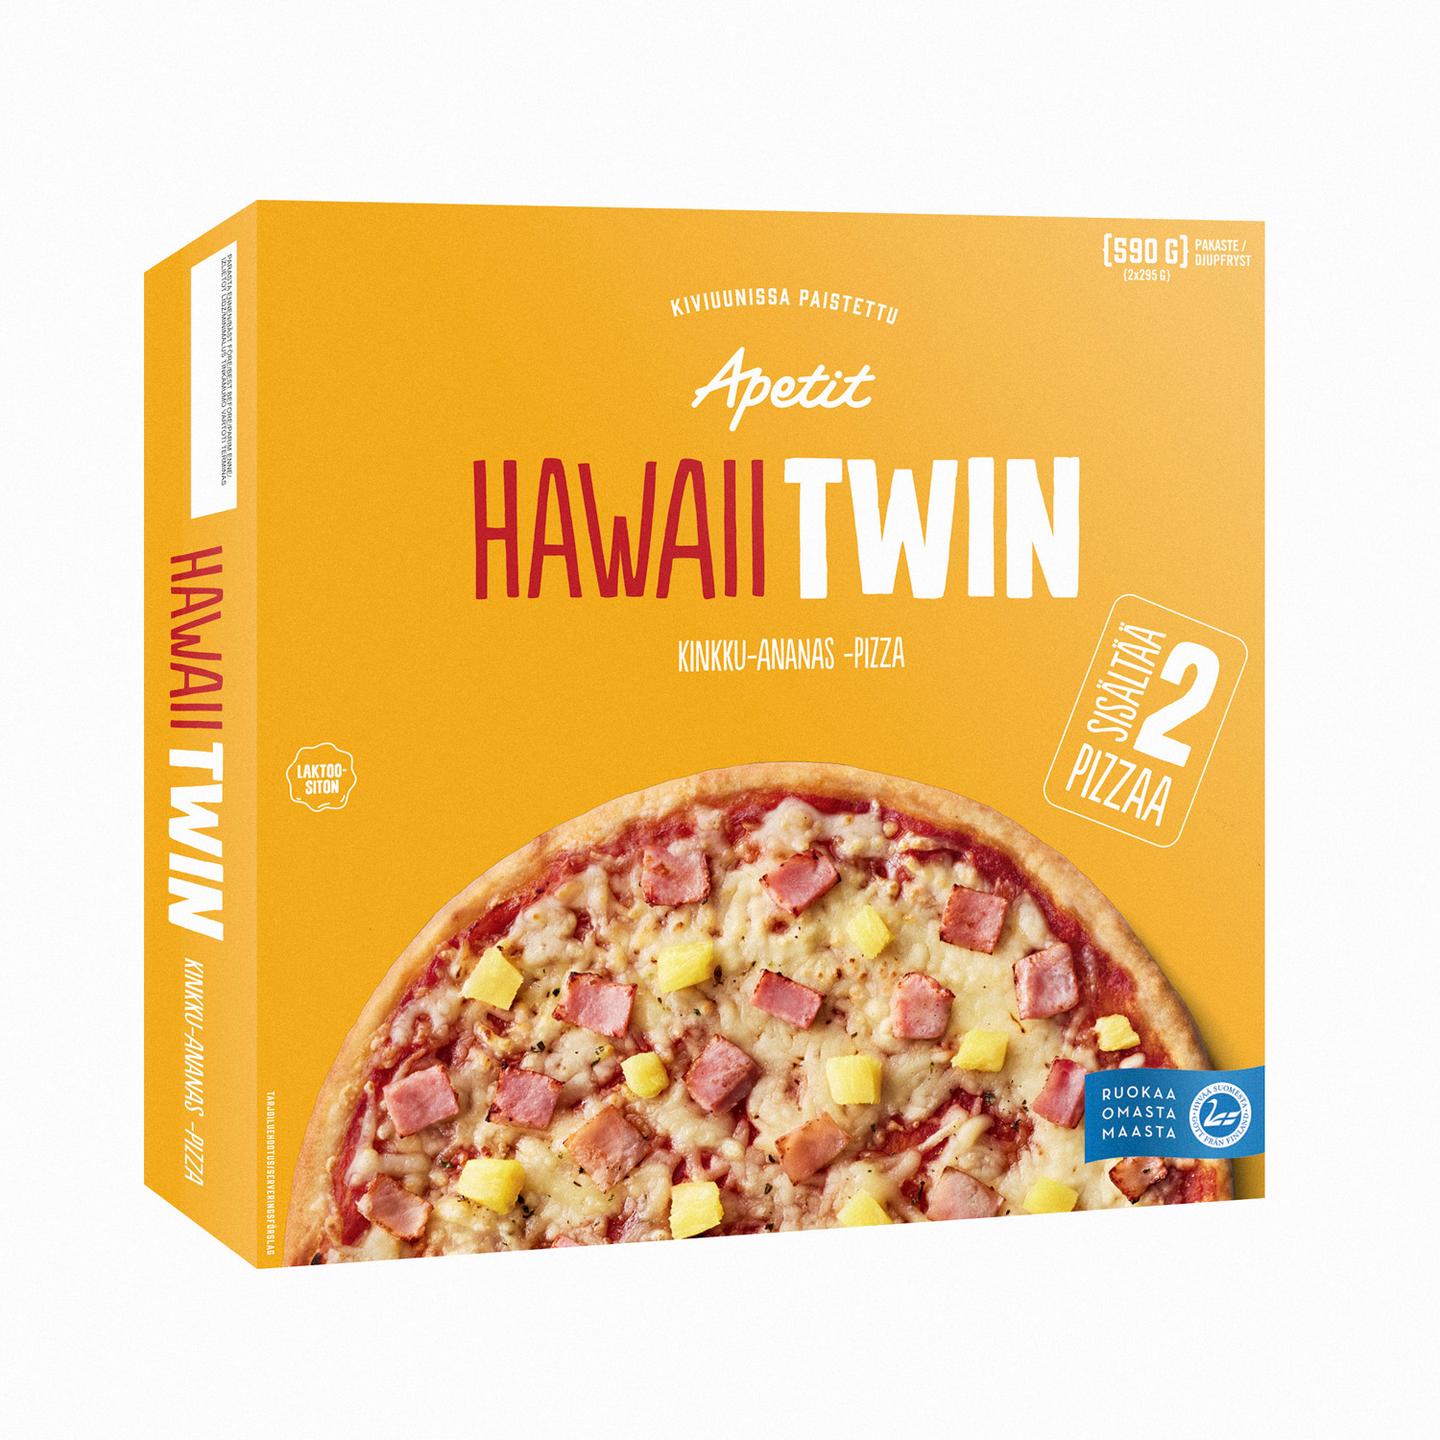 Apetit hawaii twin pizza kinkk-ananas 2x295g pakaste